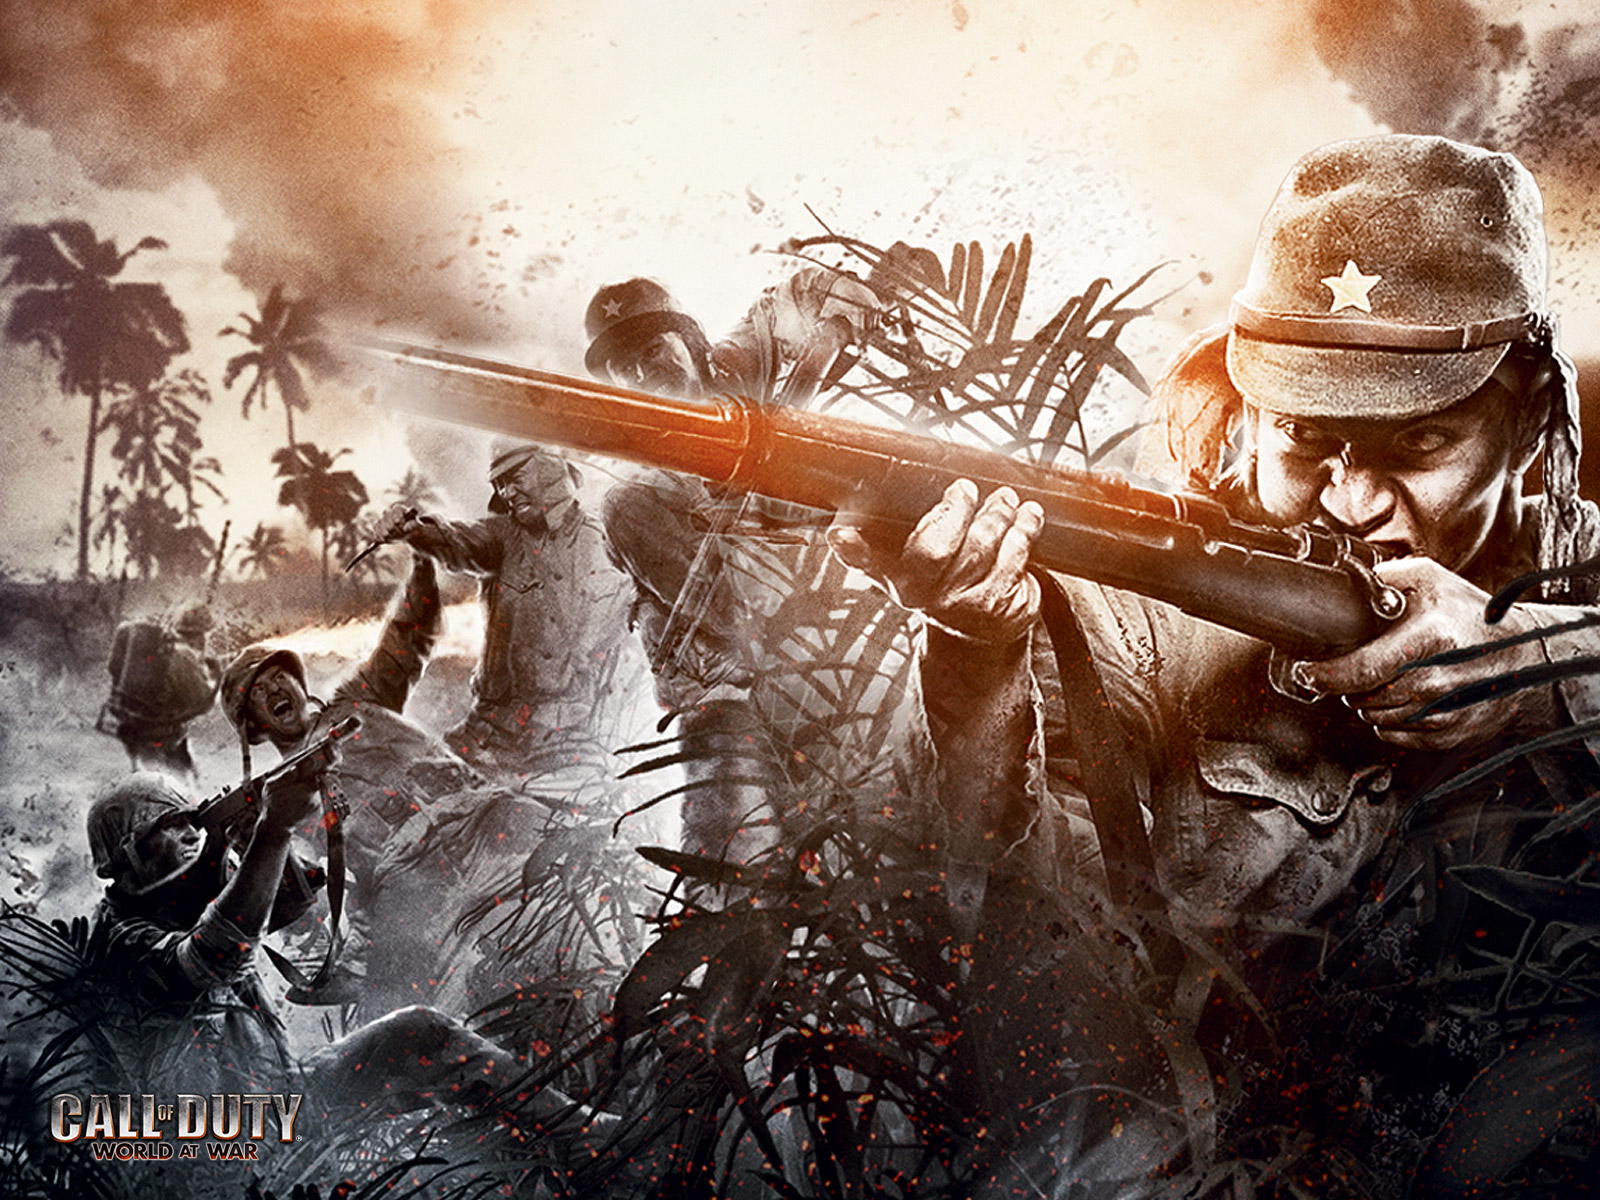 HD WALLPAPERS: Call of Duty 5 World at War